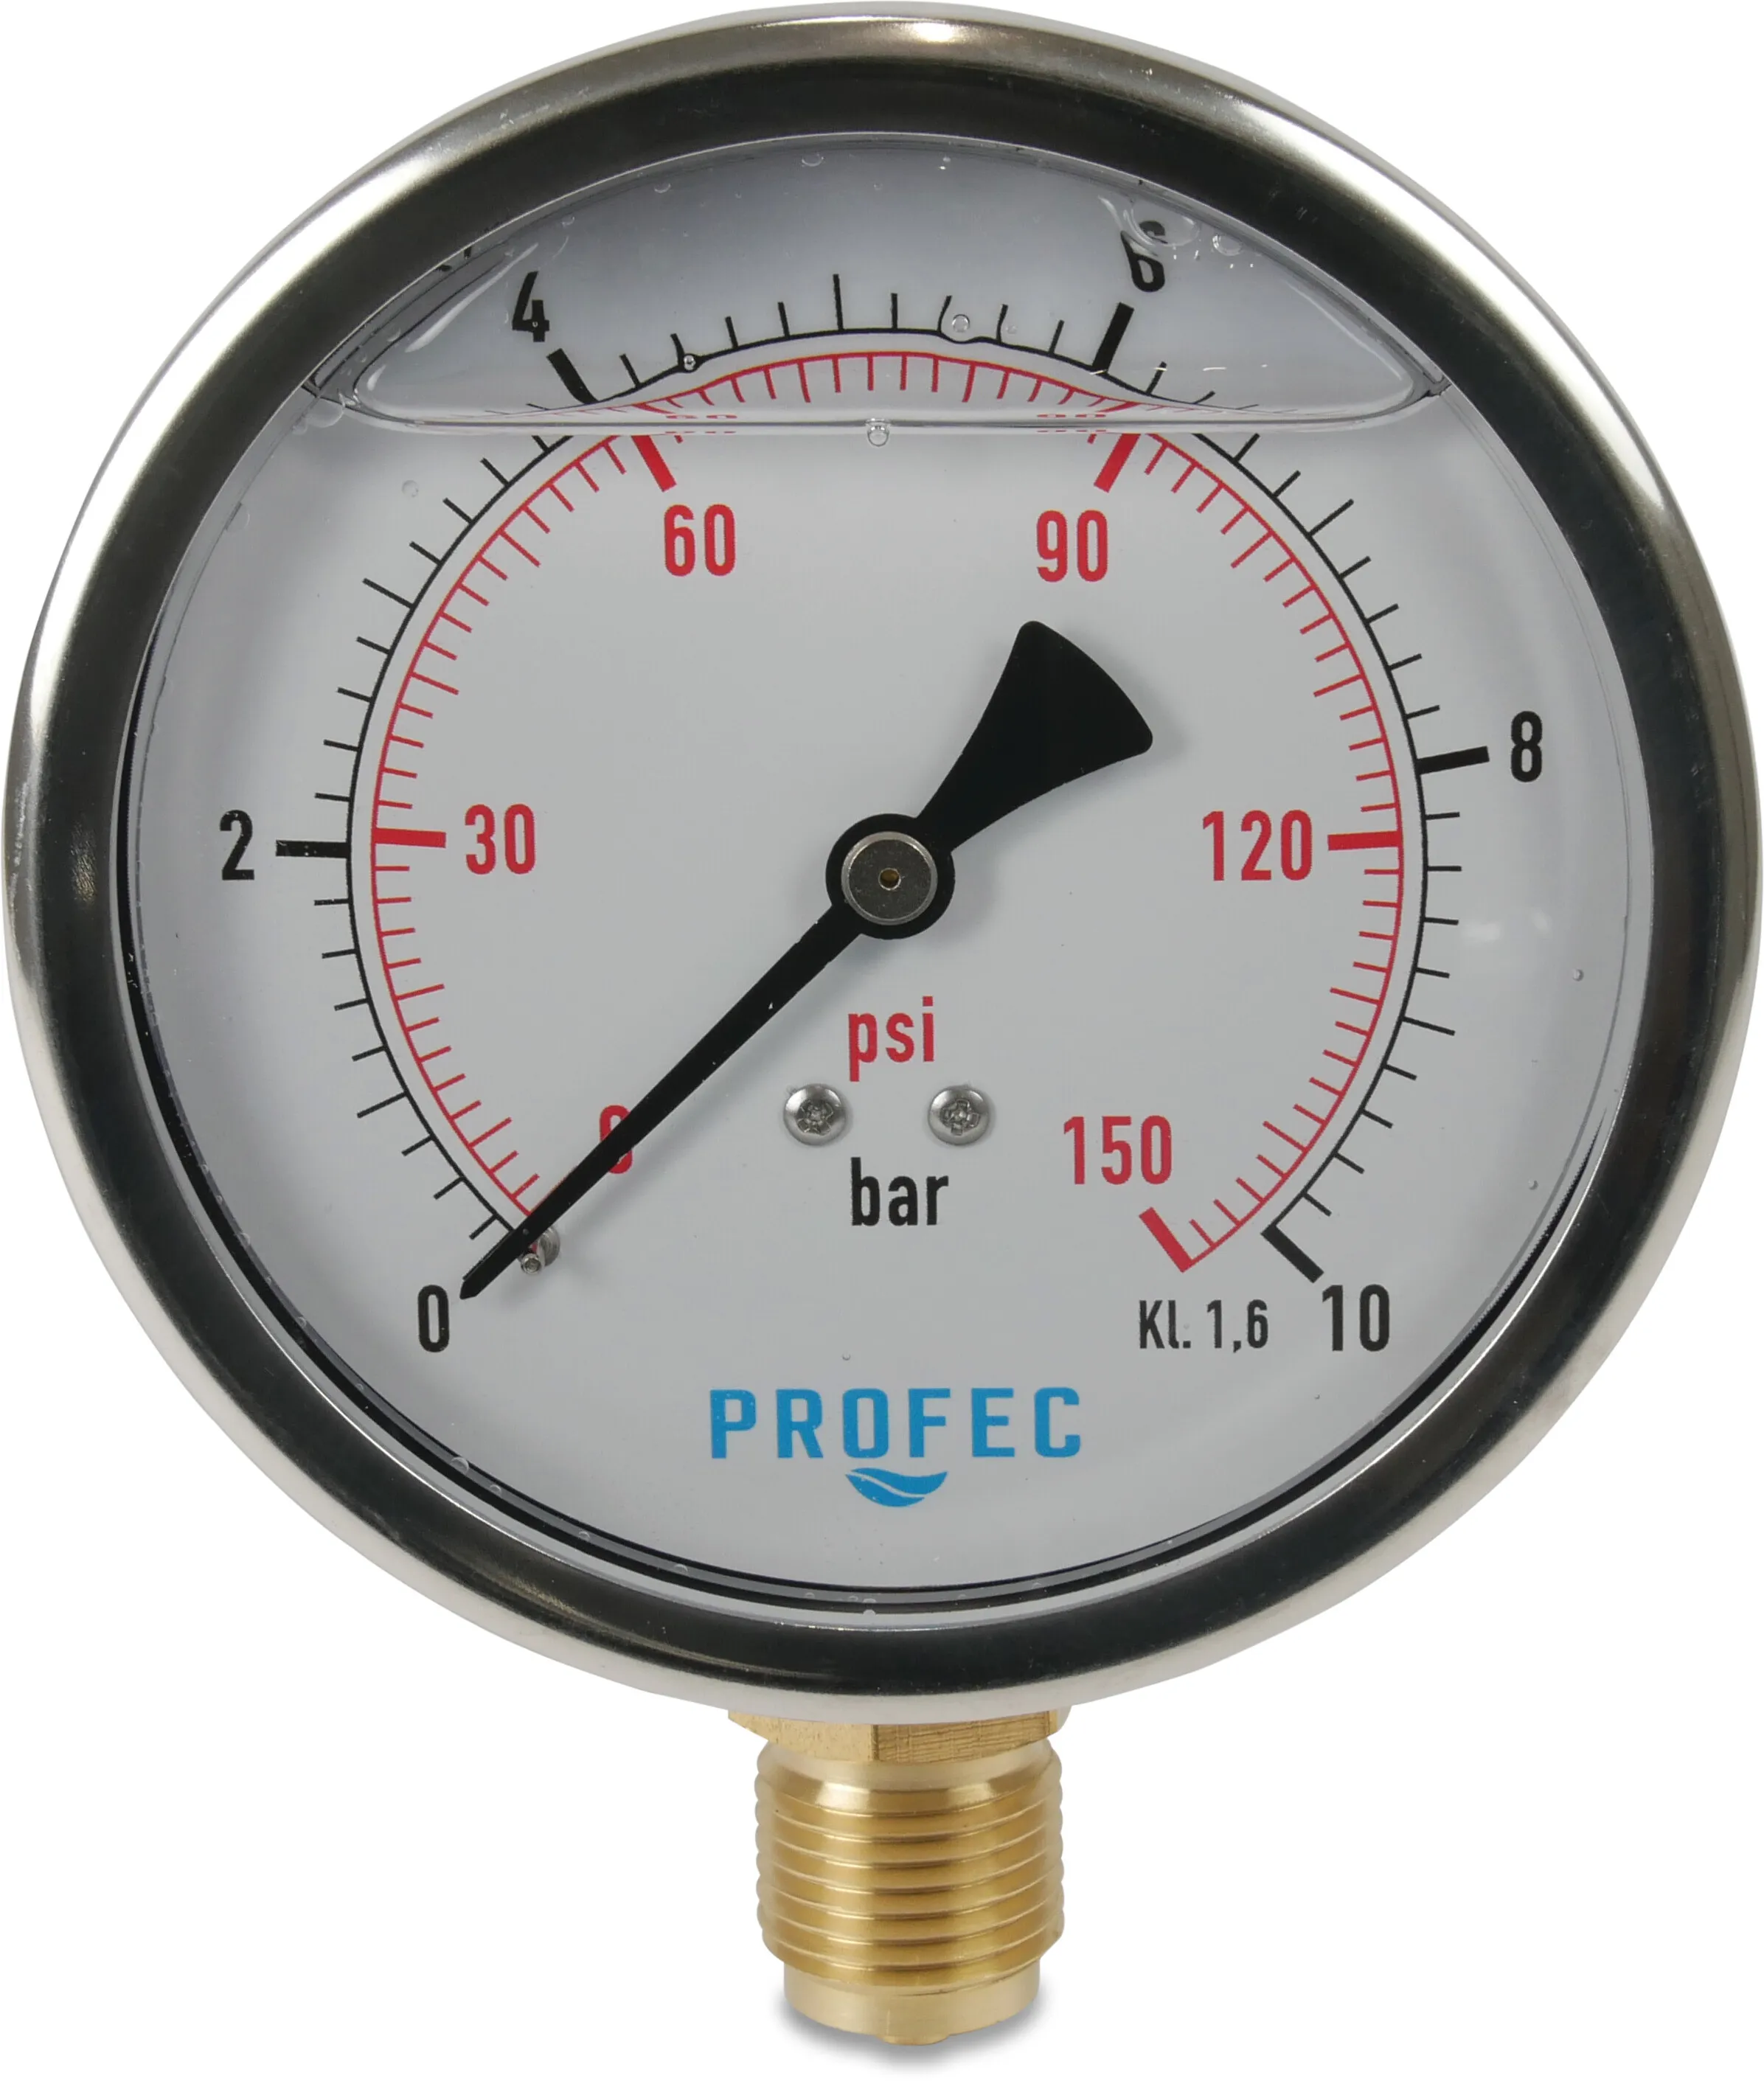 Profec Manometer 100 mm buitendraad -1 - 5bar type glycerine gevuld onderaansluiting 1/2"